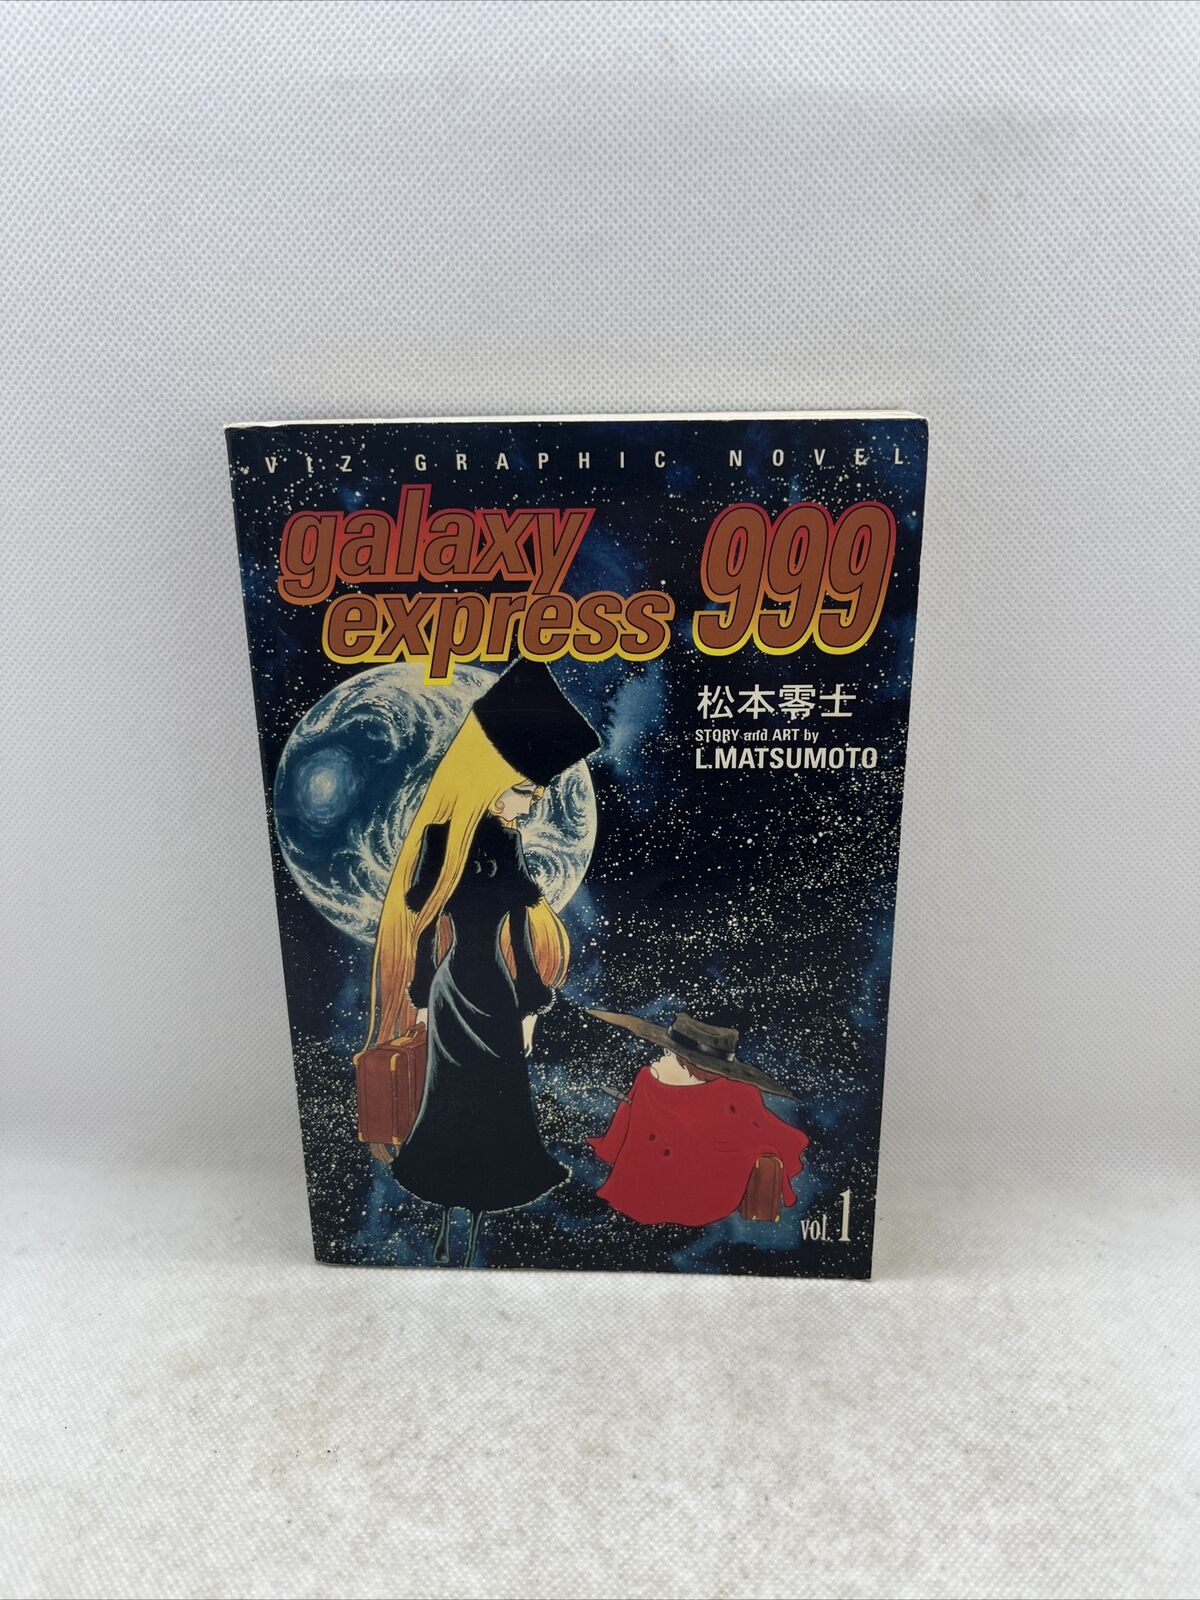 Galaxy Express 999 Volume 1 English Manga Viz Graphic Novel L.Matsumoto 1998